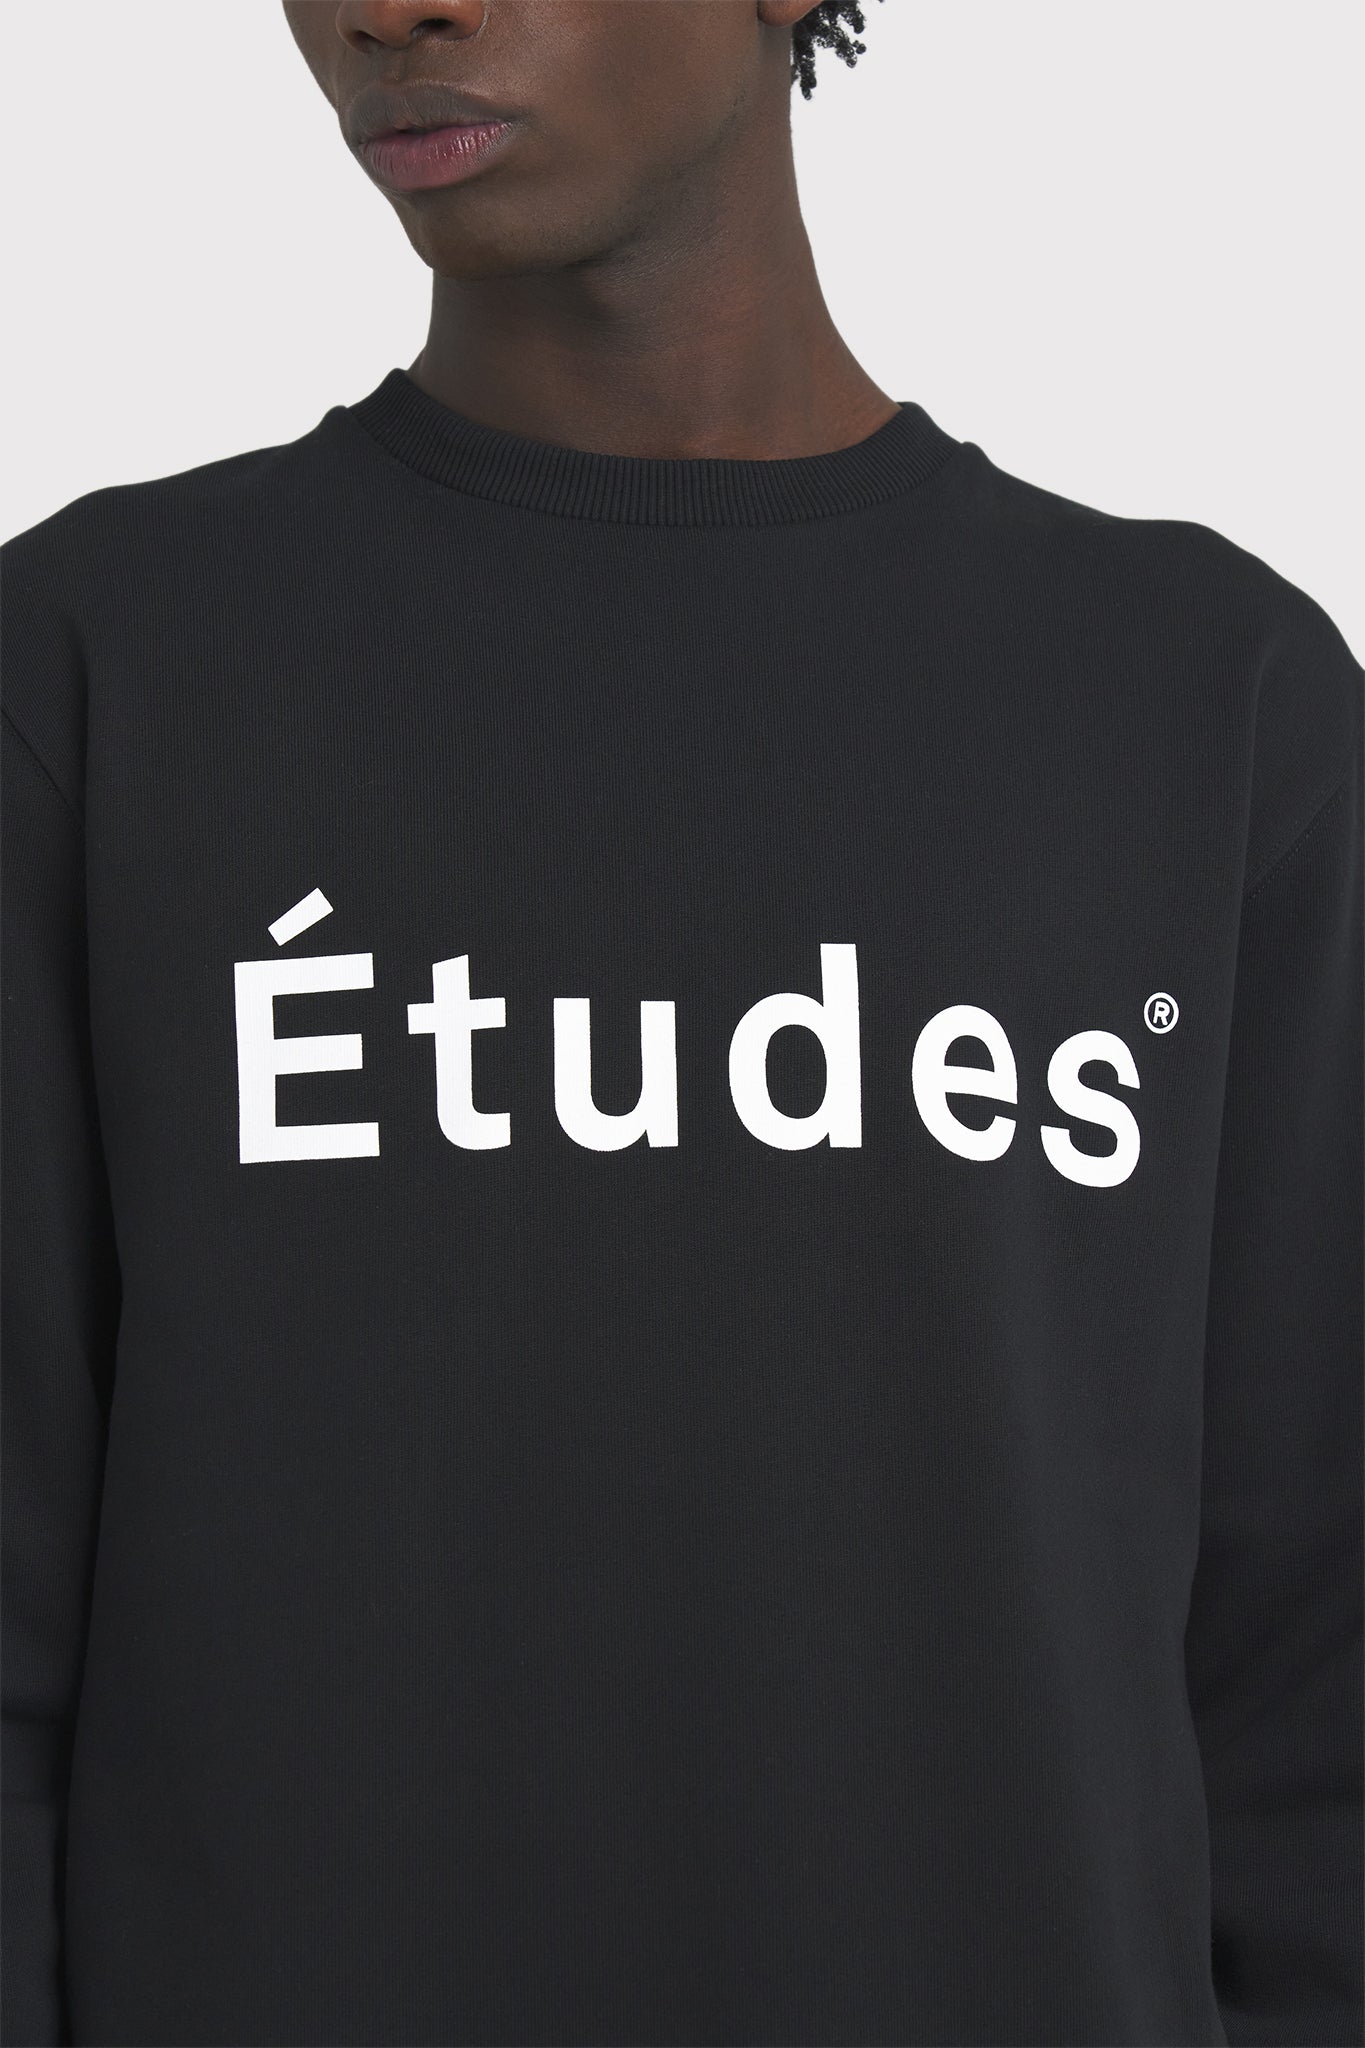 ÉTUDES STORY ETUDES BLACK SWEATSHIRTS 5